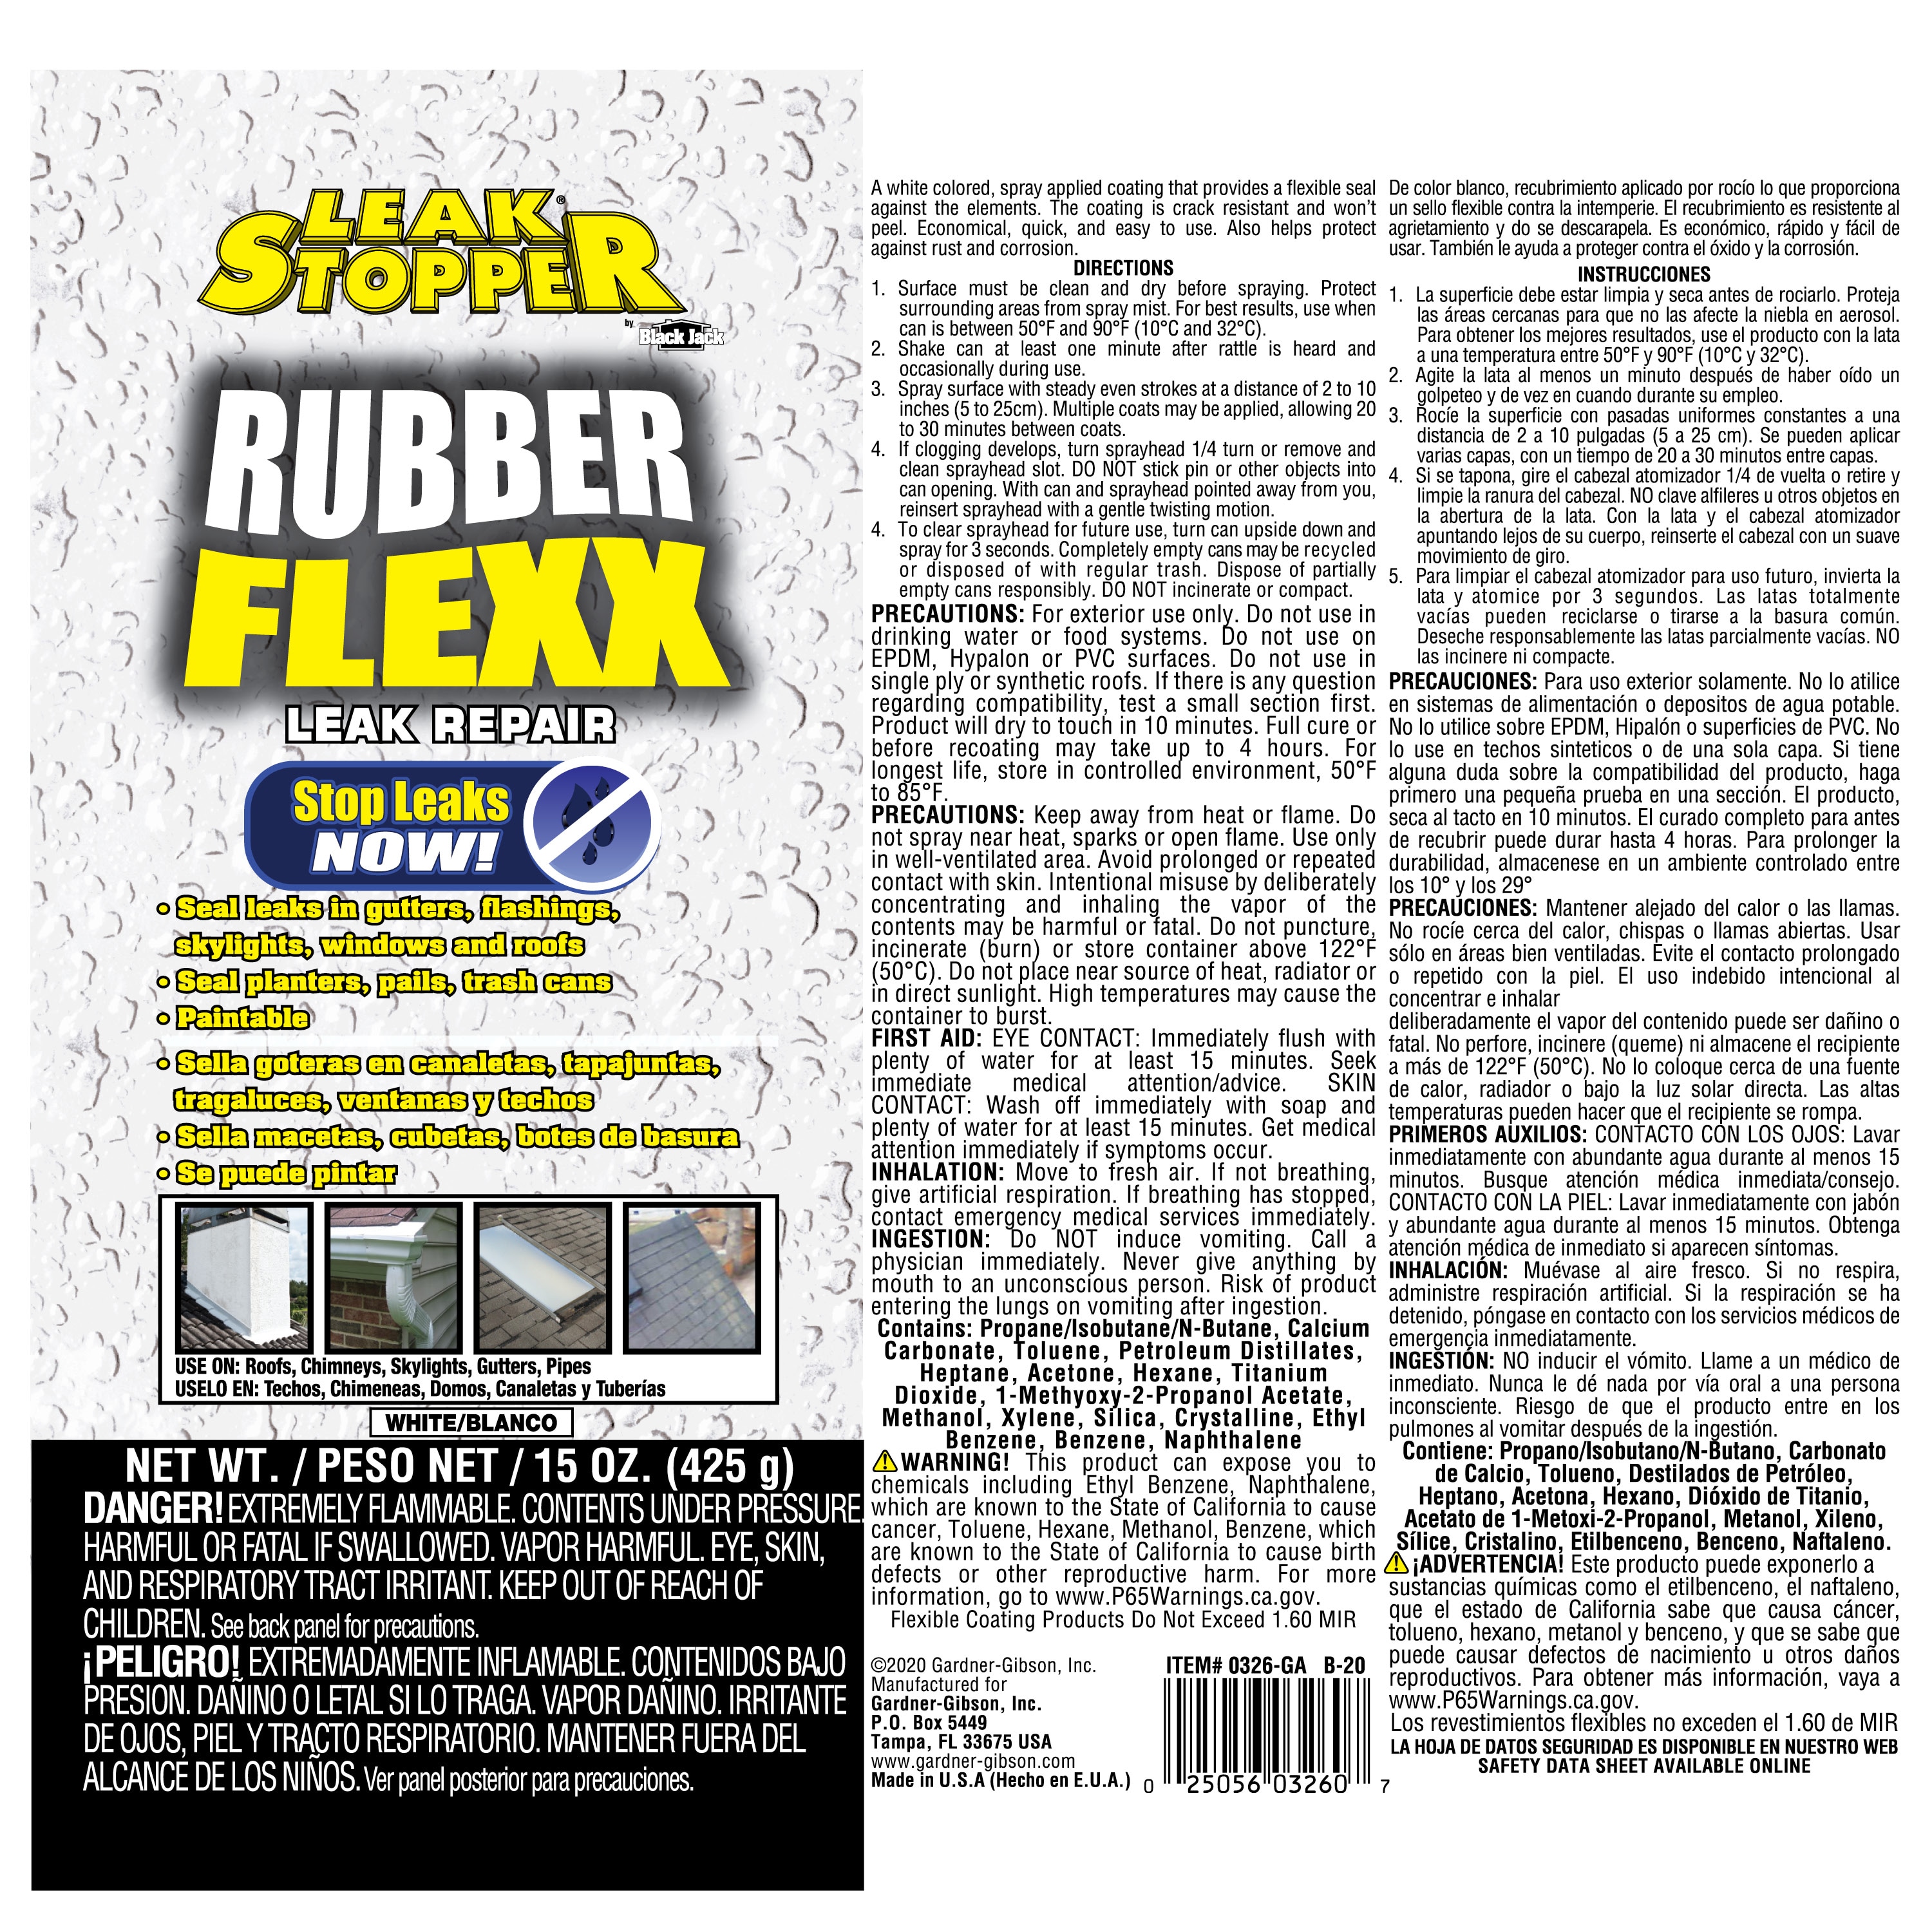 Leak Stopper® Rubber Flexx Liquid Rubber Coating (White) – Black